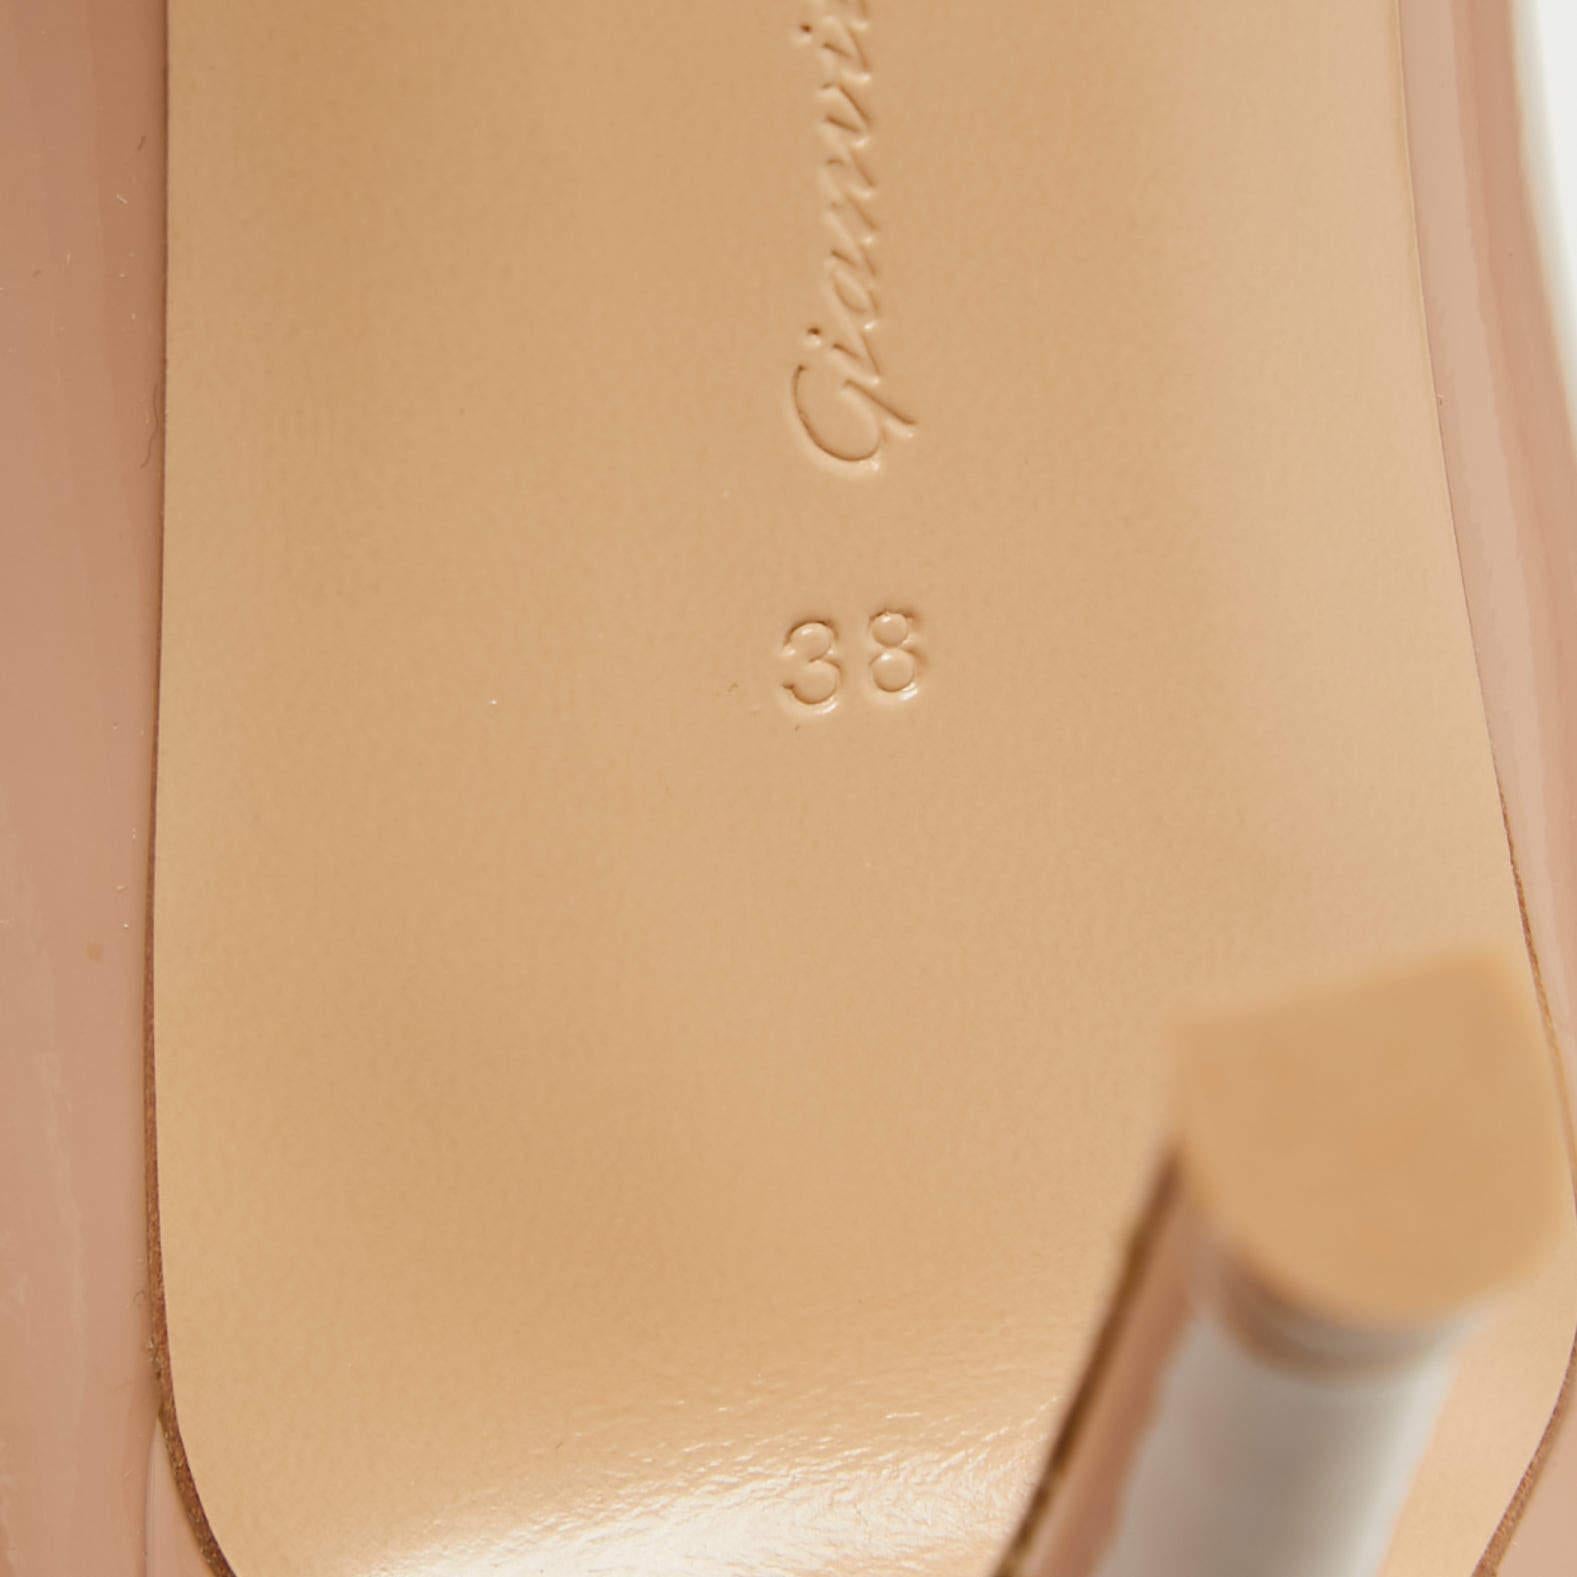 Gianvito Rossi Pink Patent Leather Jaipur Pumps Size 38 In New Condition For Sale In Dubai, Al Qouz 2